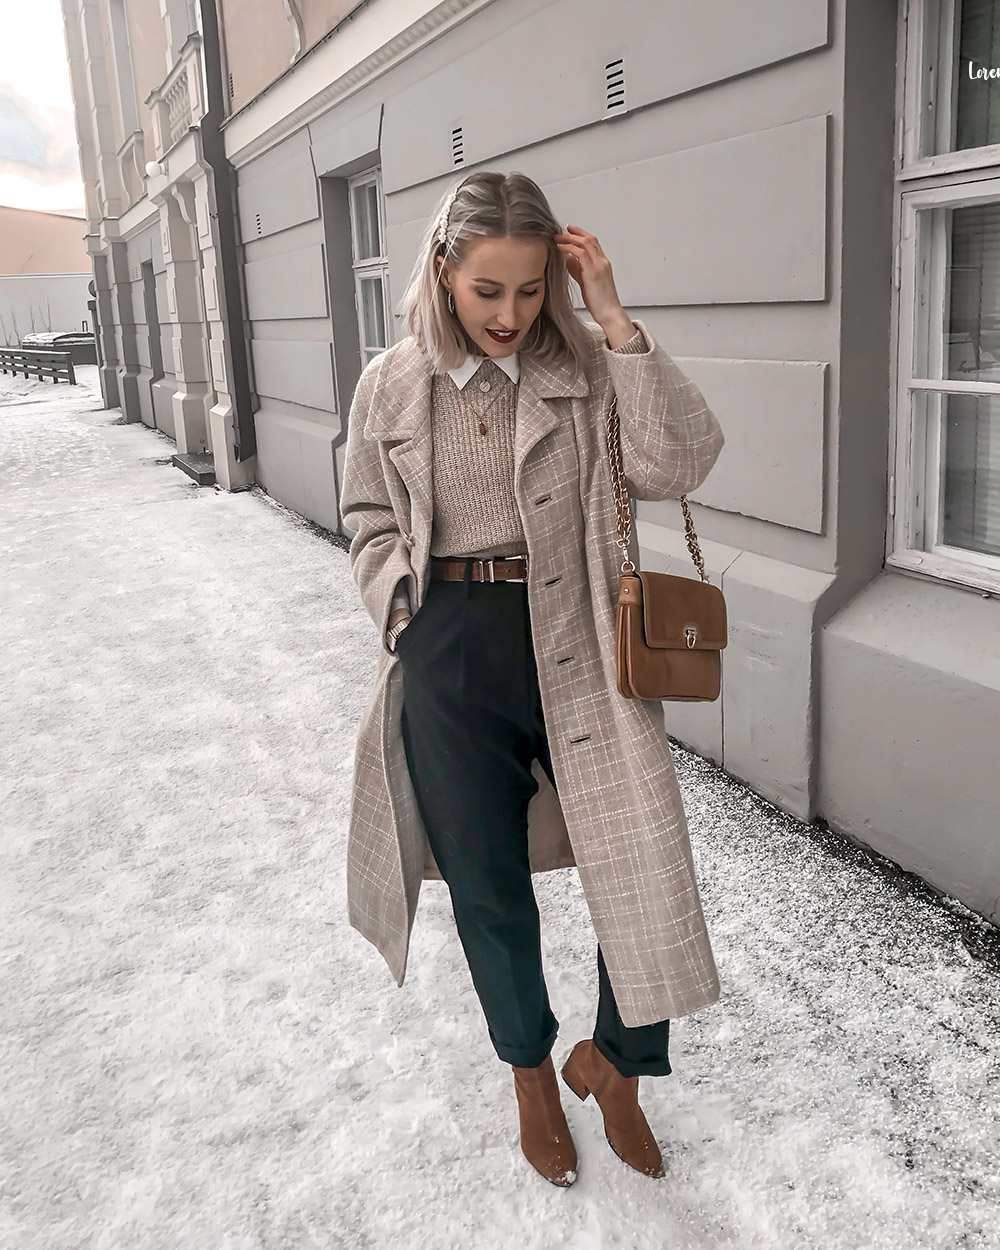 Winter Fashion - Latest